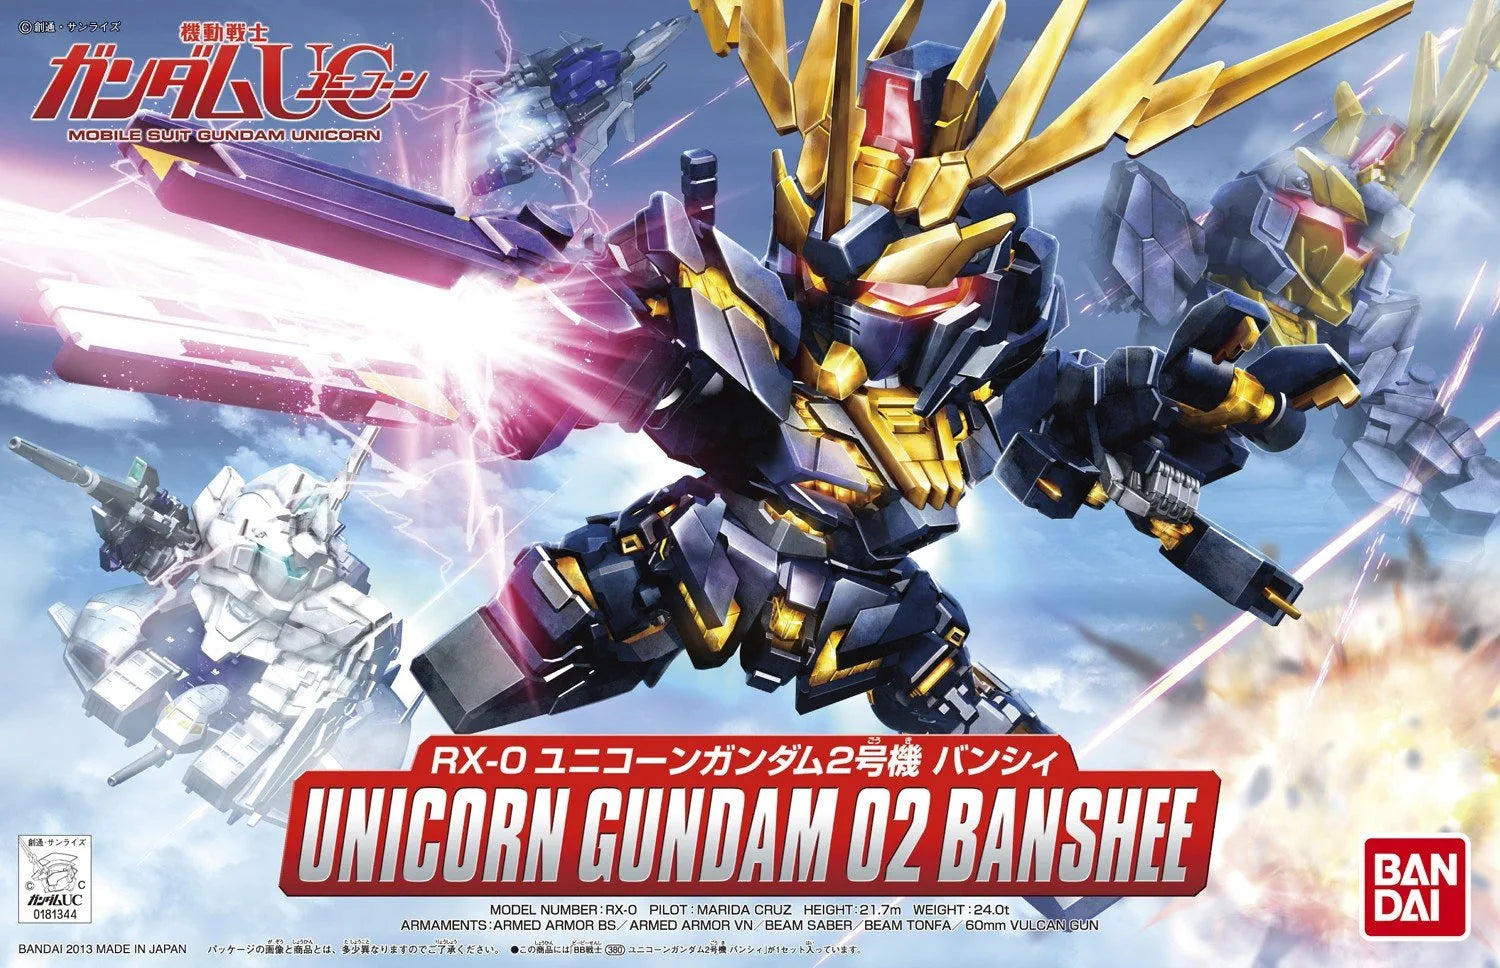 Bandai BB380 02 Banshee Super Deformed Gundam Unicorn Action Figure - Bards & Cards